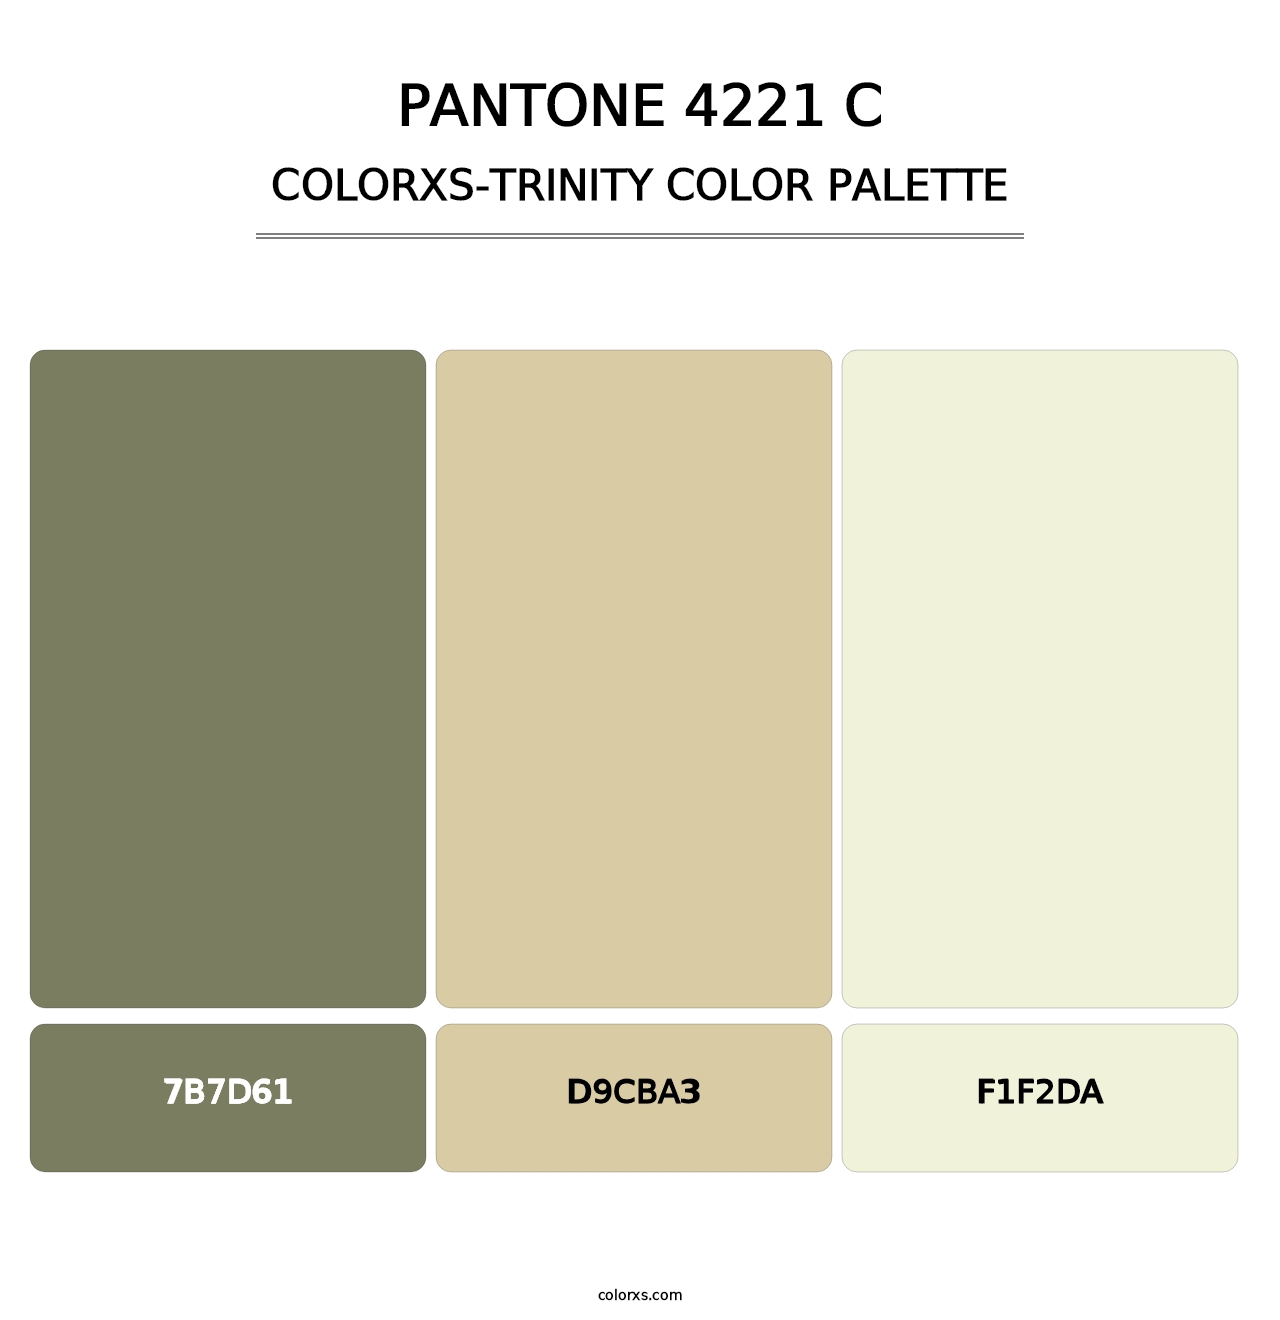 PANTONE 4221 C - Colorxs Trinity Palette